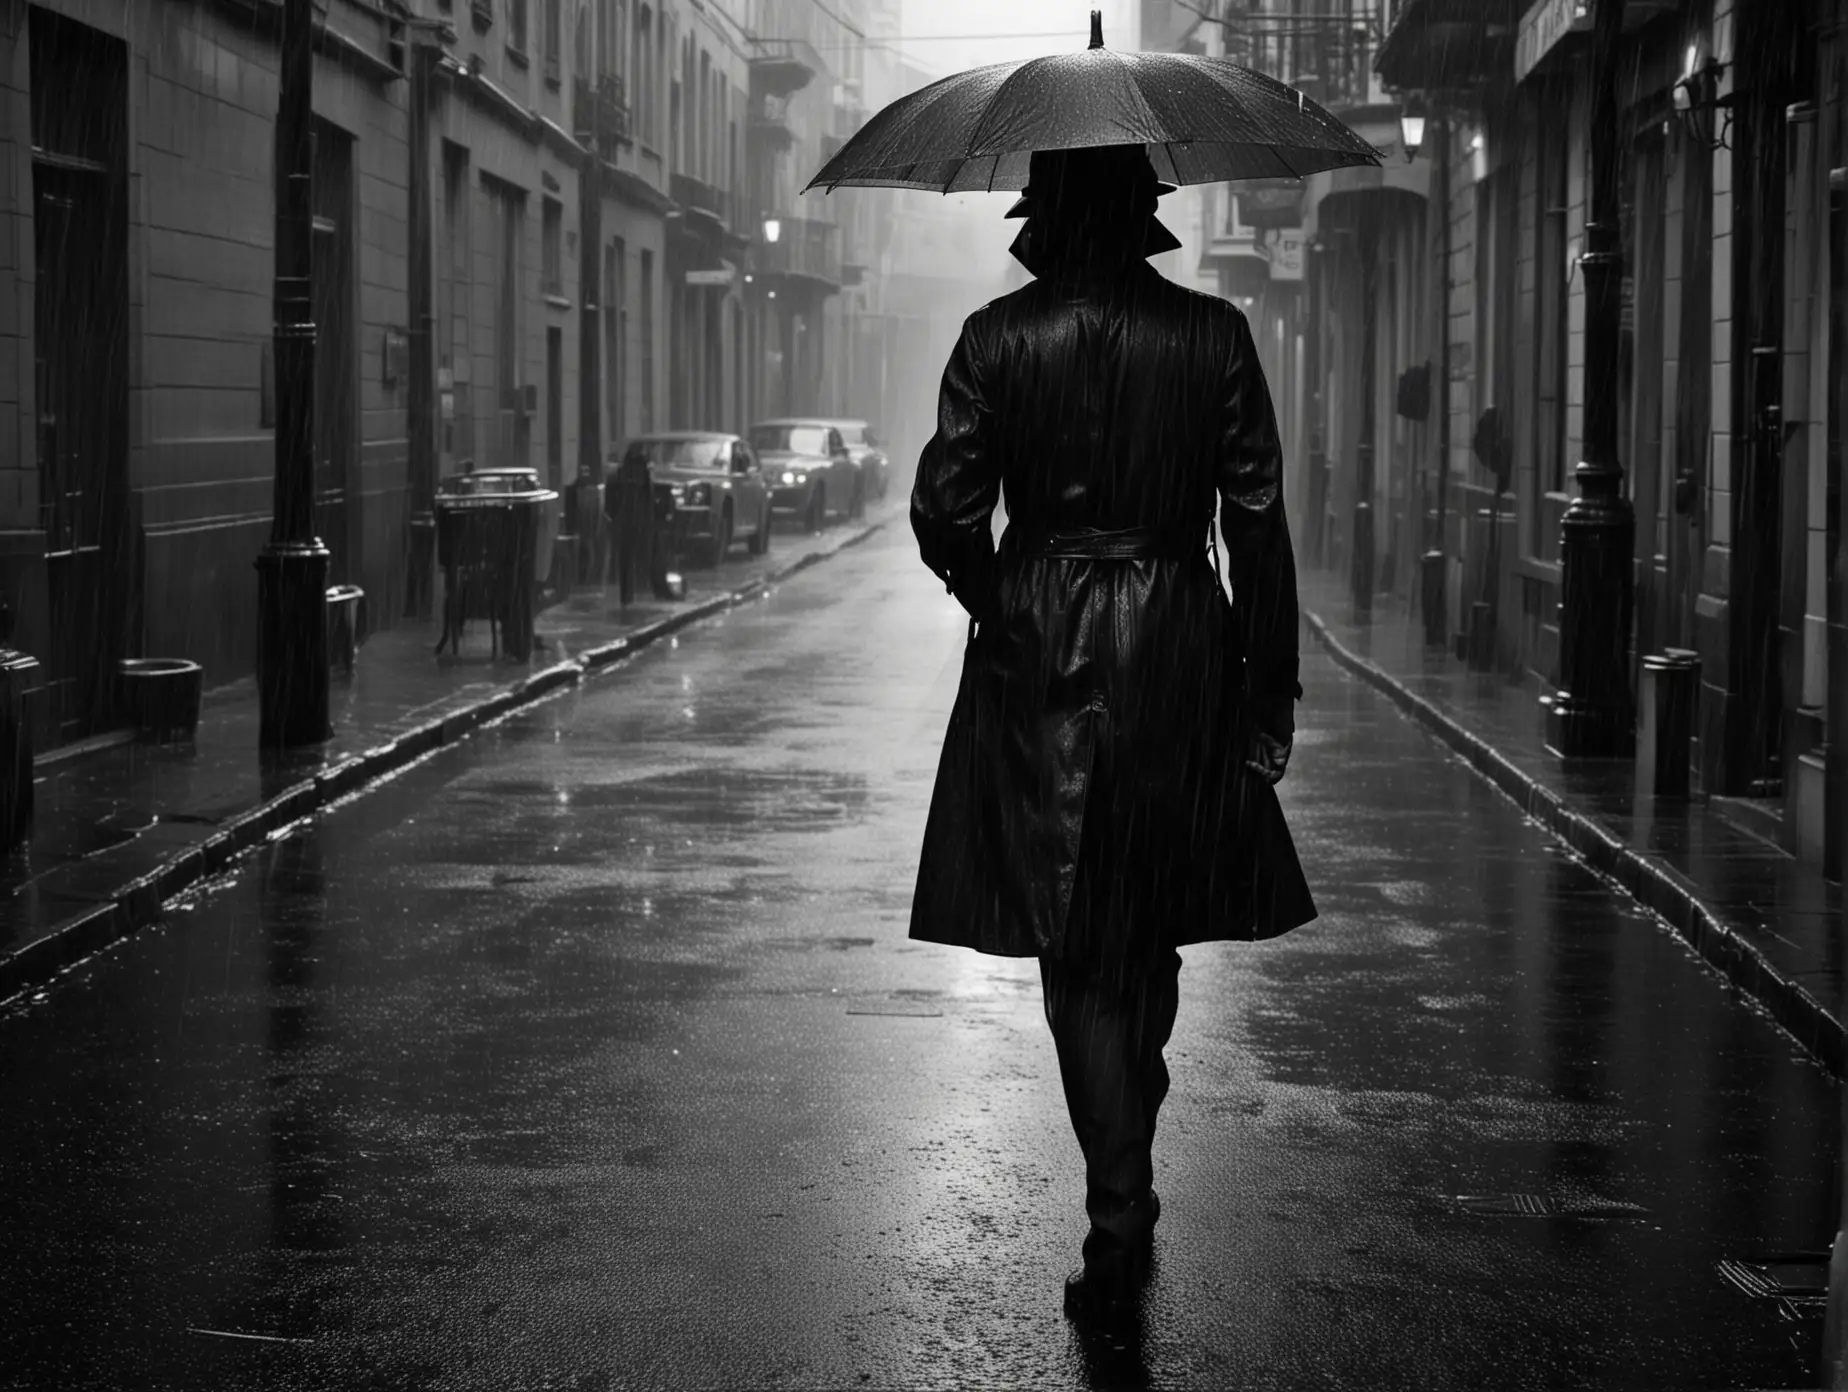 killer in the rain, noir chiaroscuro style